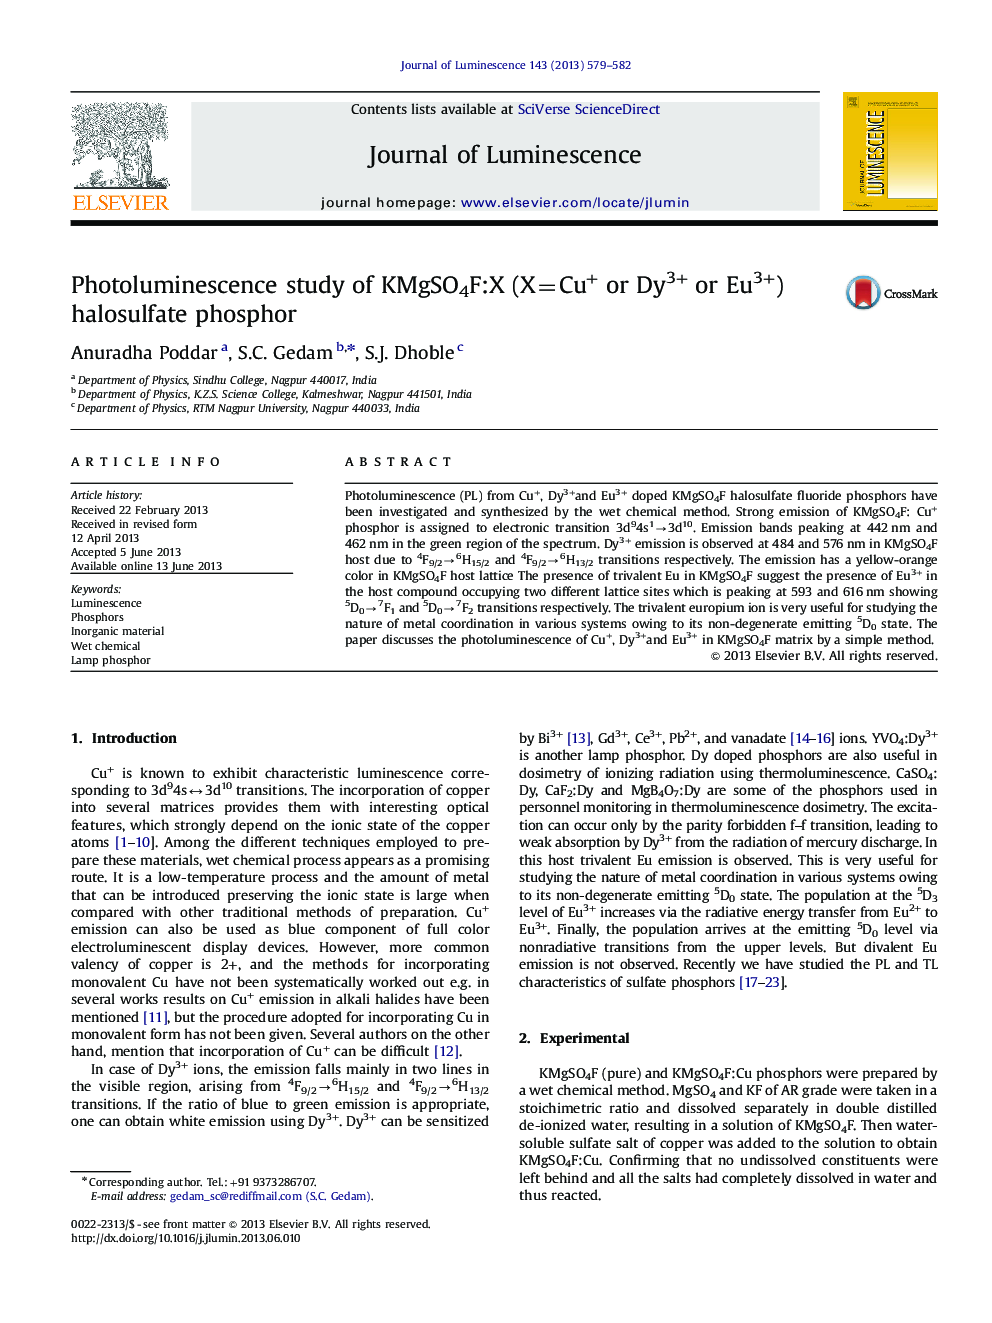 Photoluminescence study of KMgSO4F:X (X=Cu+ or Dy3+ or Eu3+) halosulfate phosphor